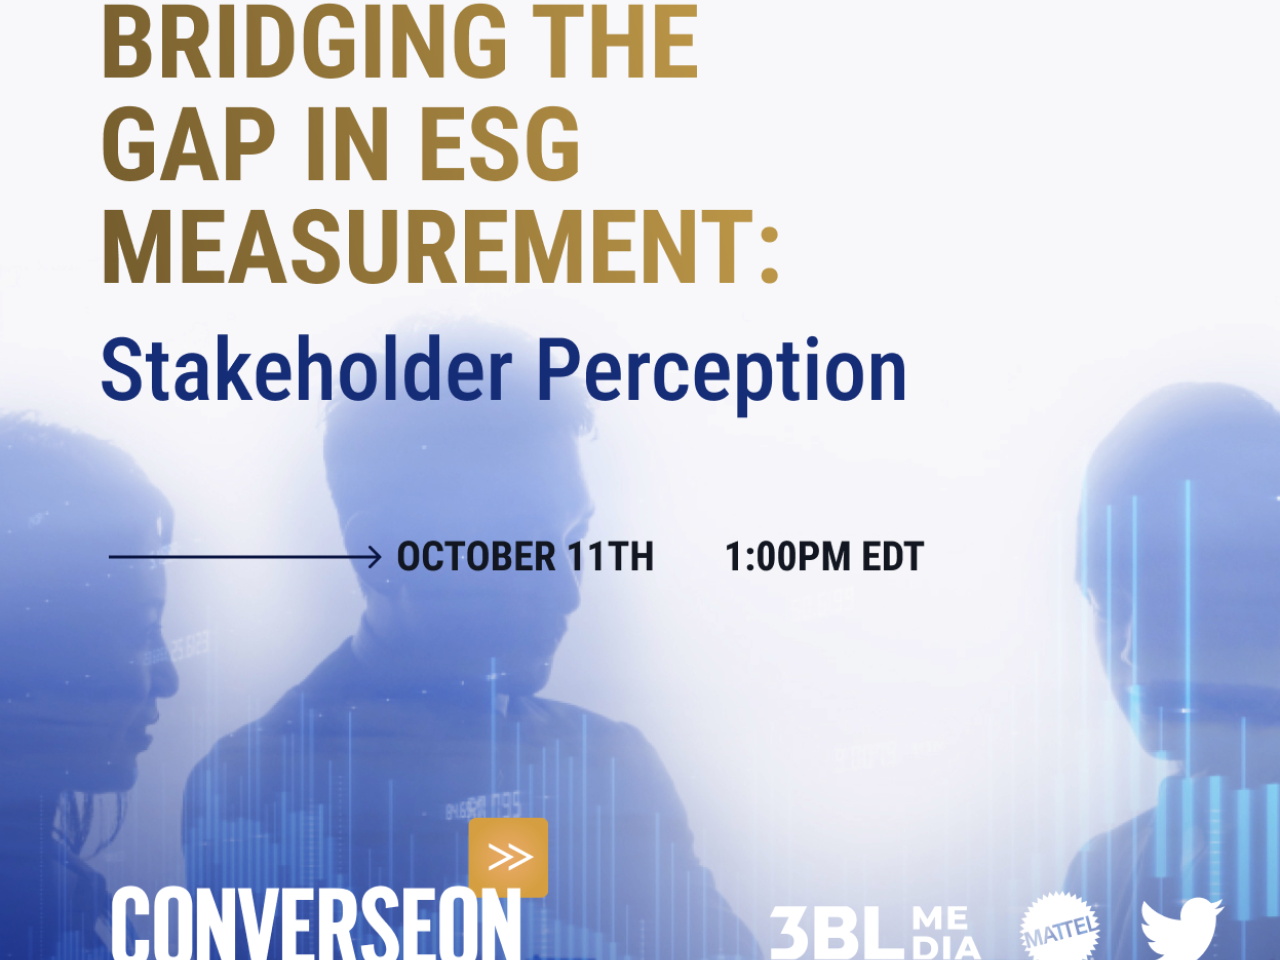 "Bridging the Gap in ESG Measurement: Stakeholder Perception"